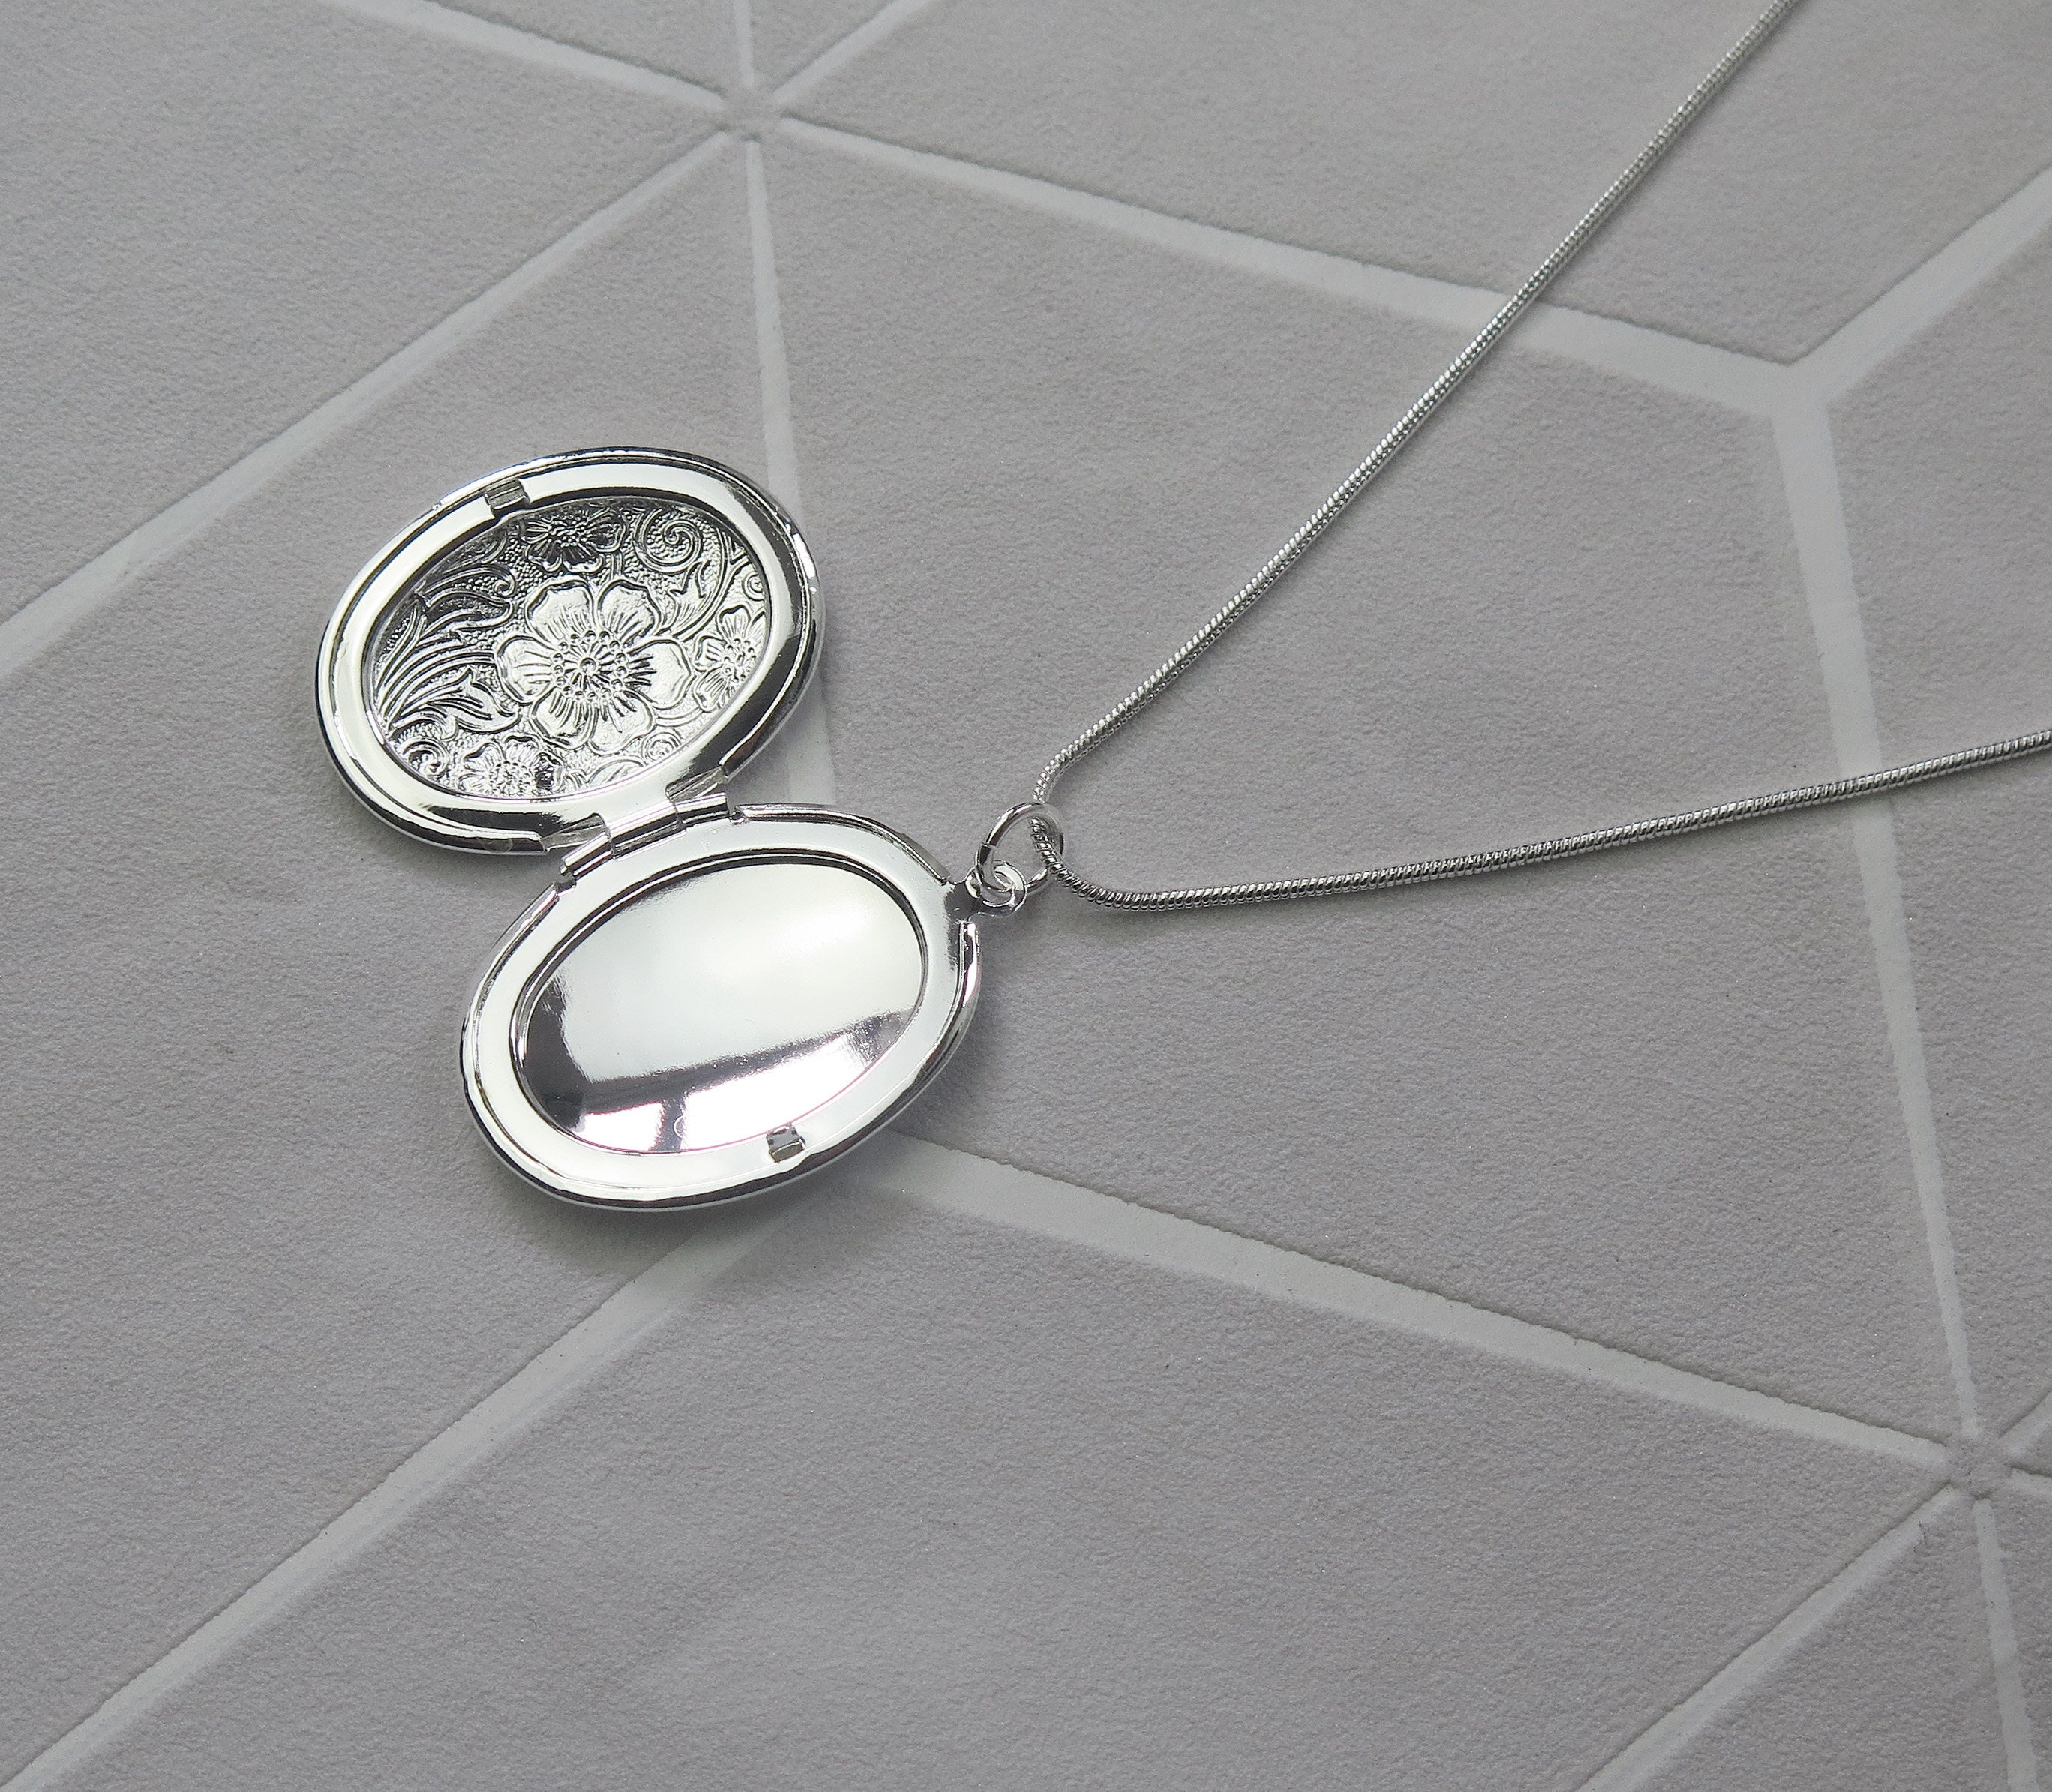 Sterling Silver Oval Locket Necklace – Sterling Forever